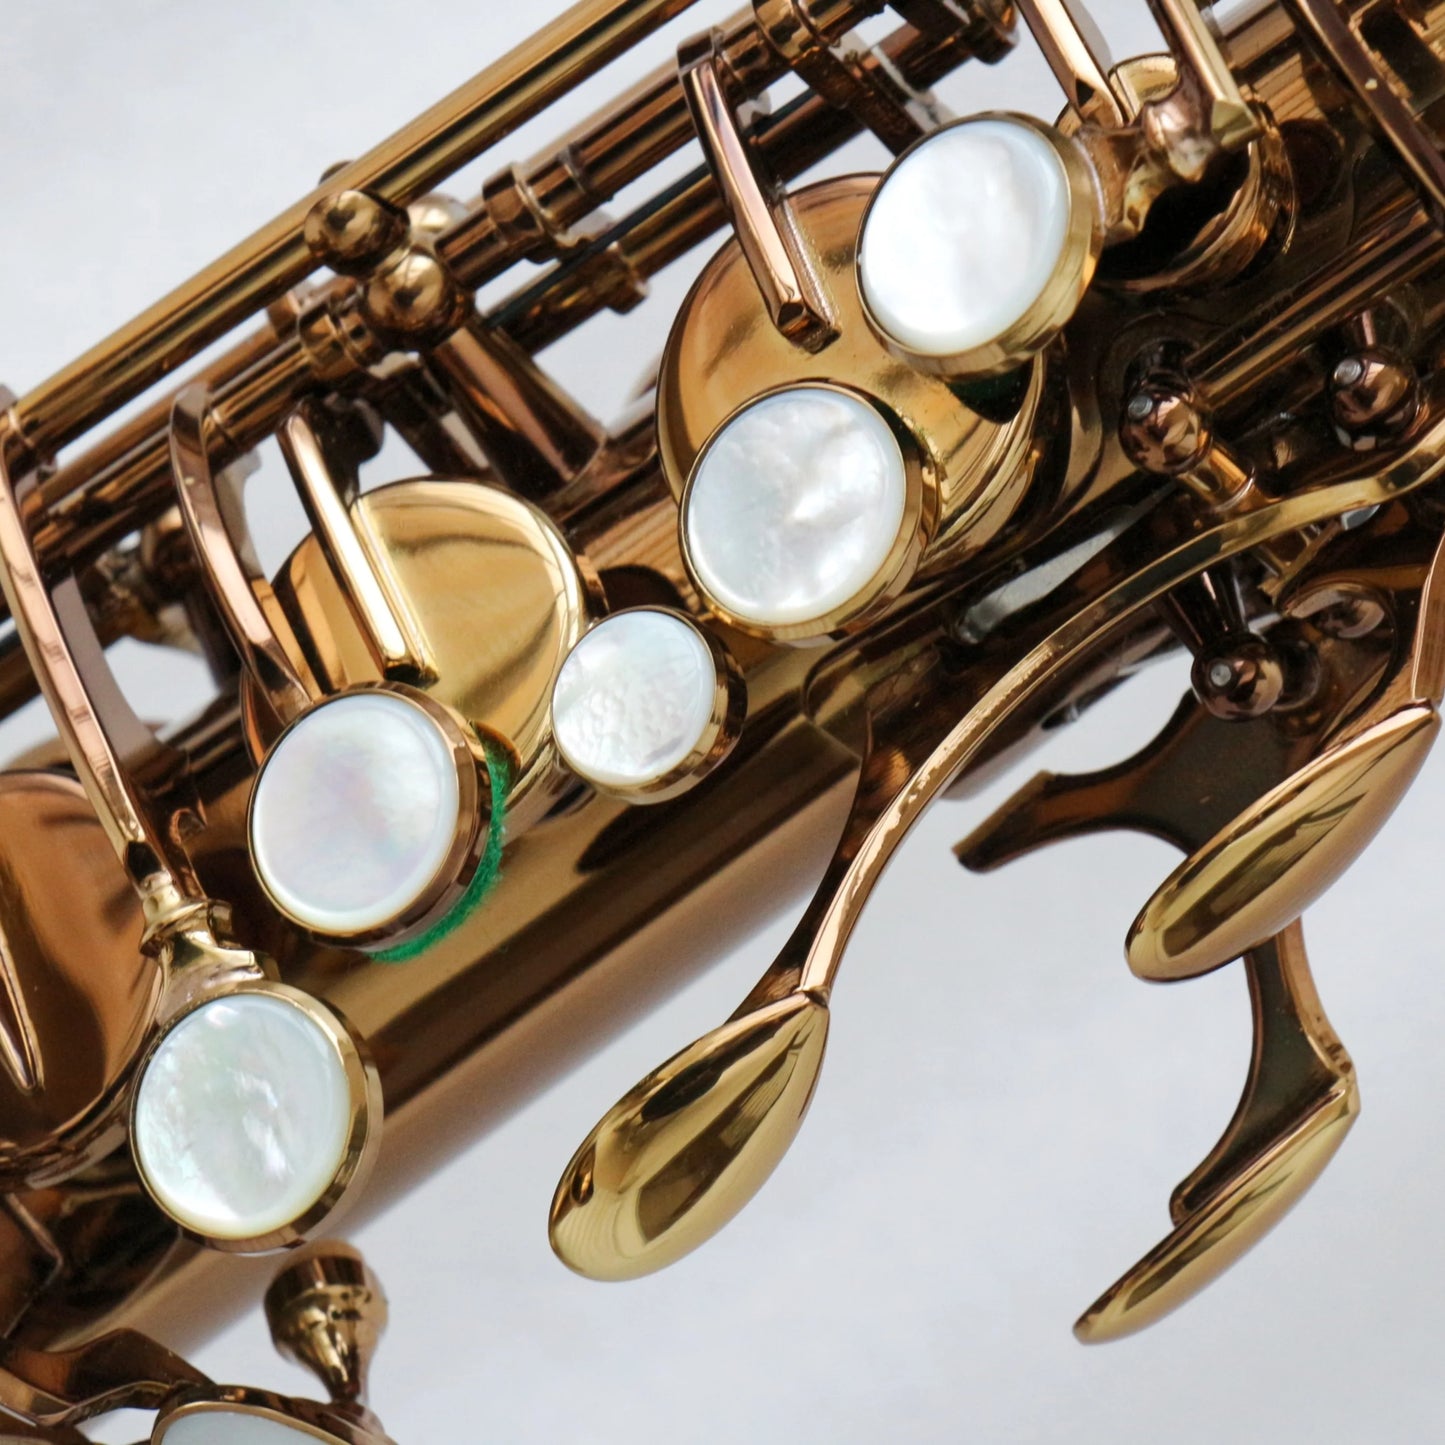 Professional saxophone alto Eb tone Brass body Coffee Gold Plated alto saxophone for performance